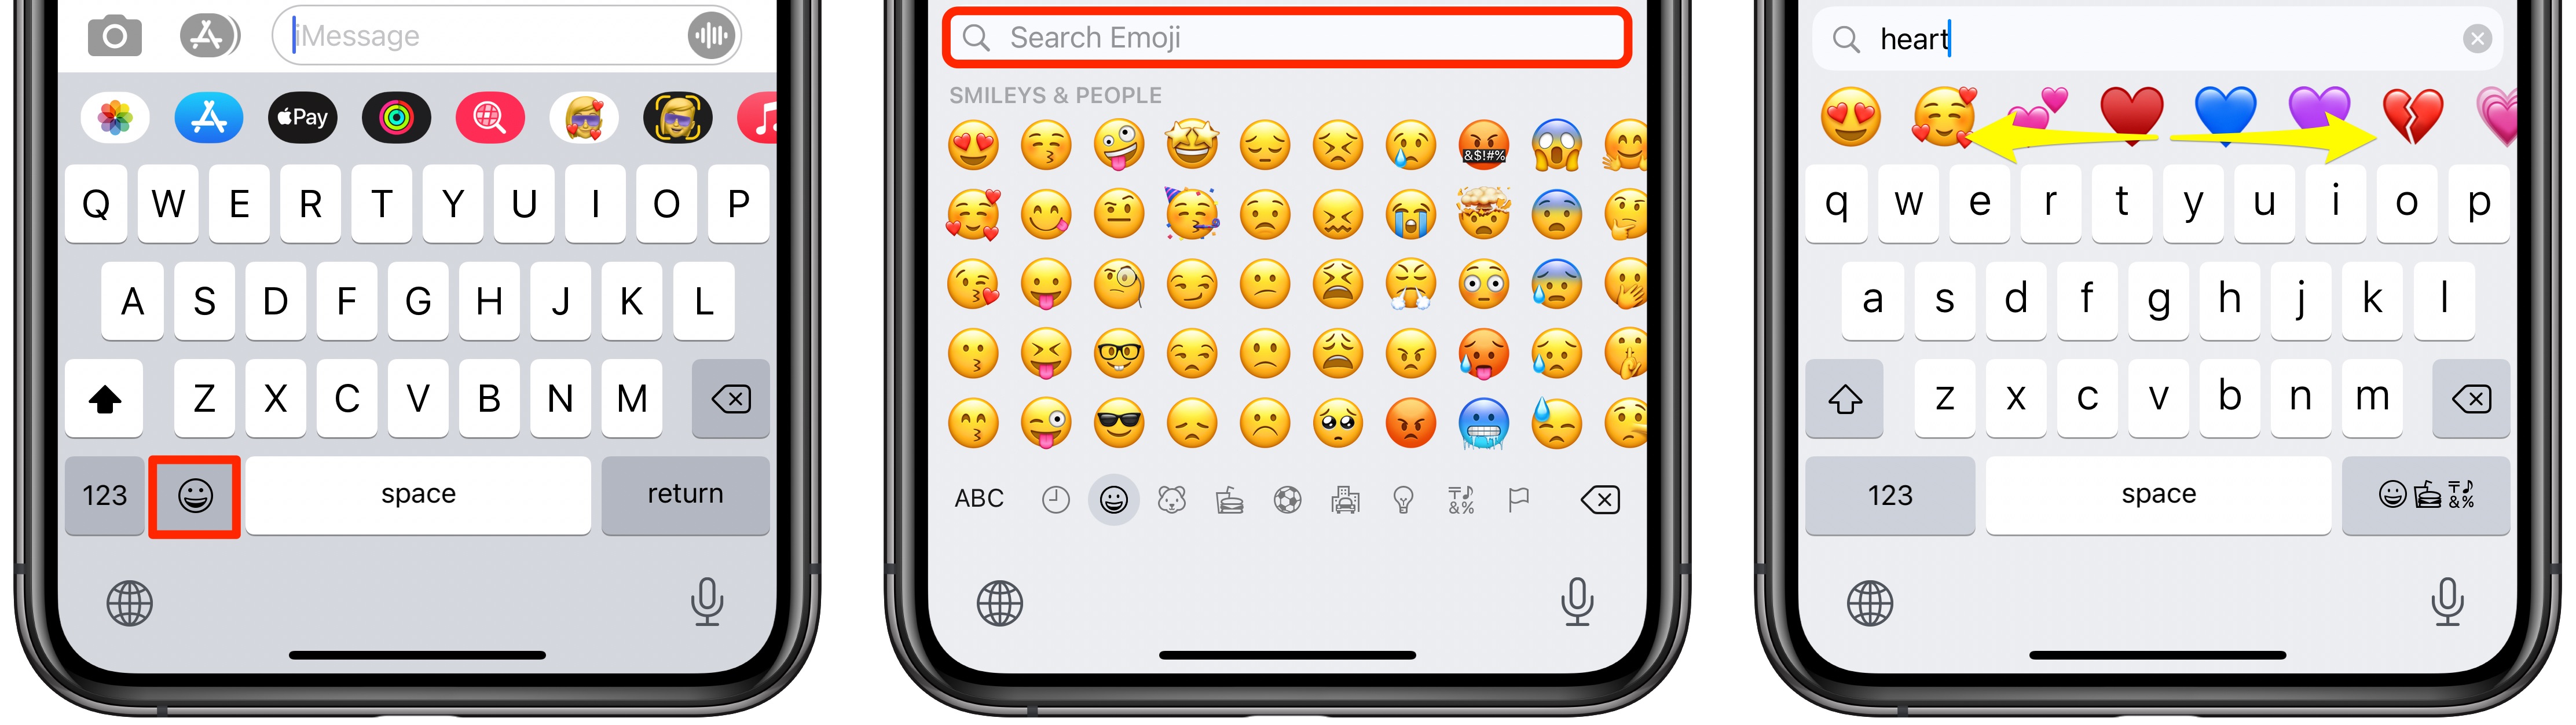 iPhone emoji search